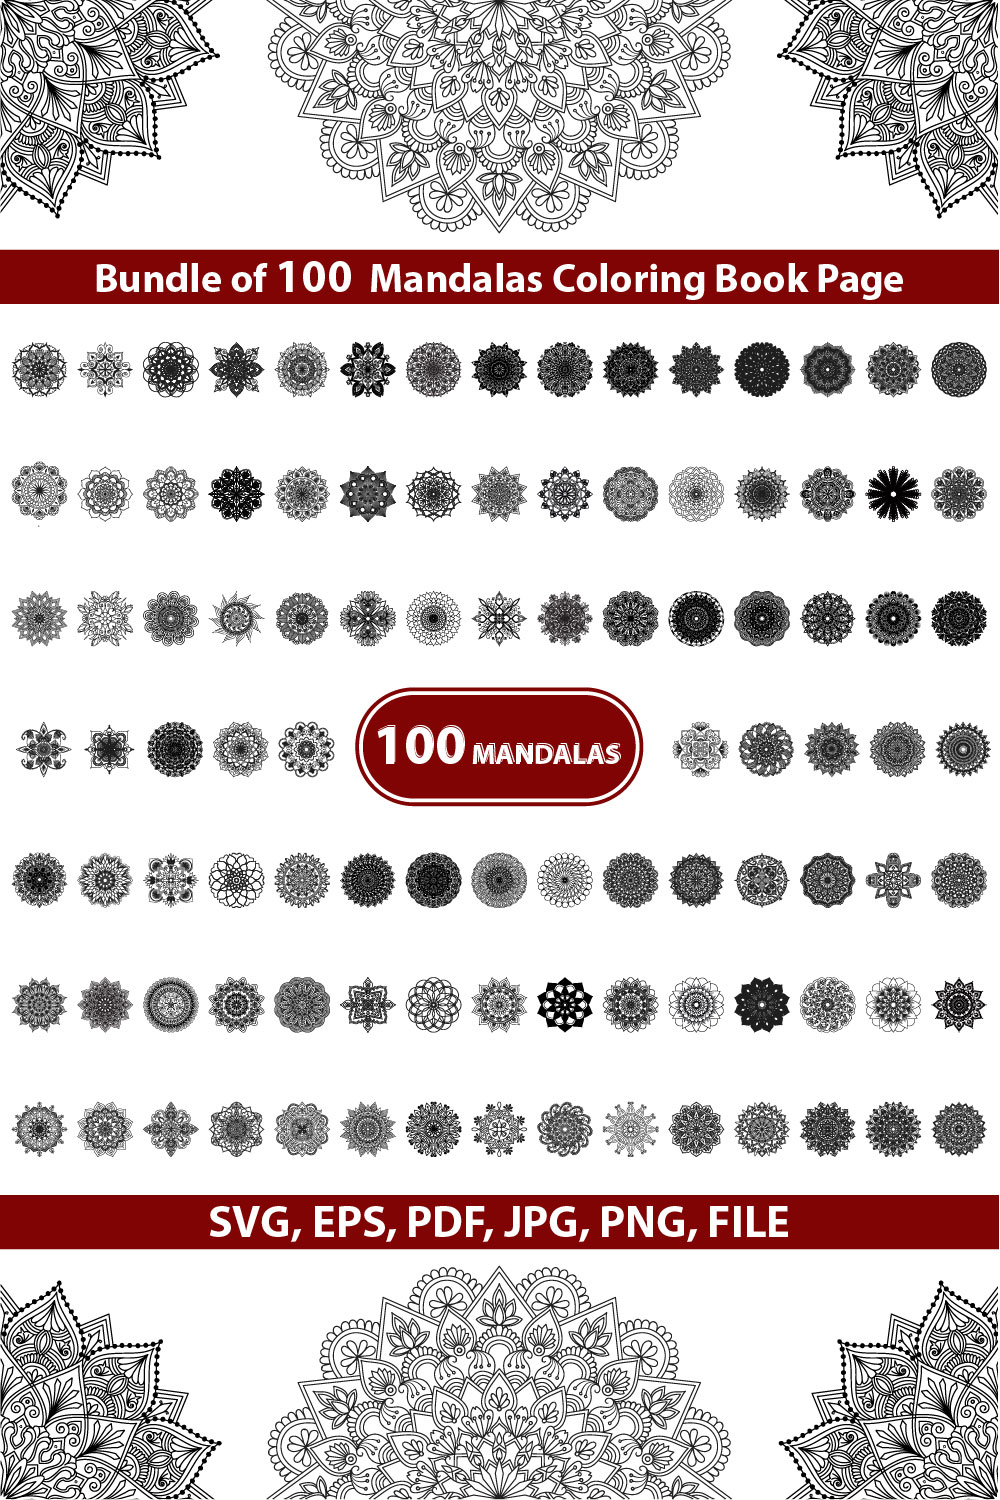 Bundle of 100 Mandalas Coloring Book Page pinterest preview image.